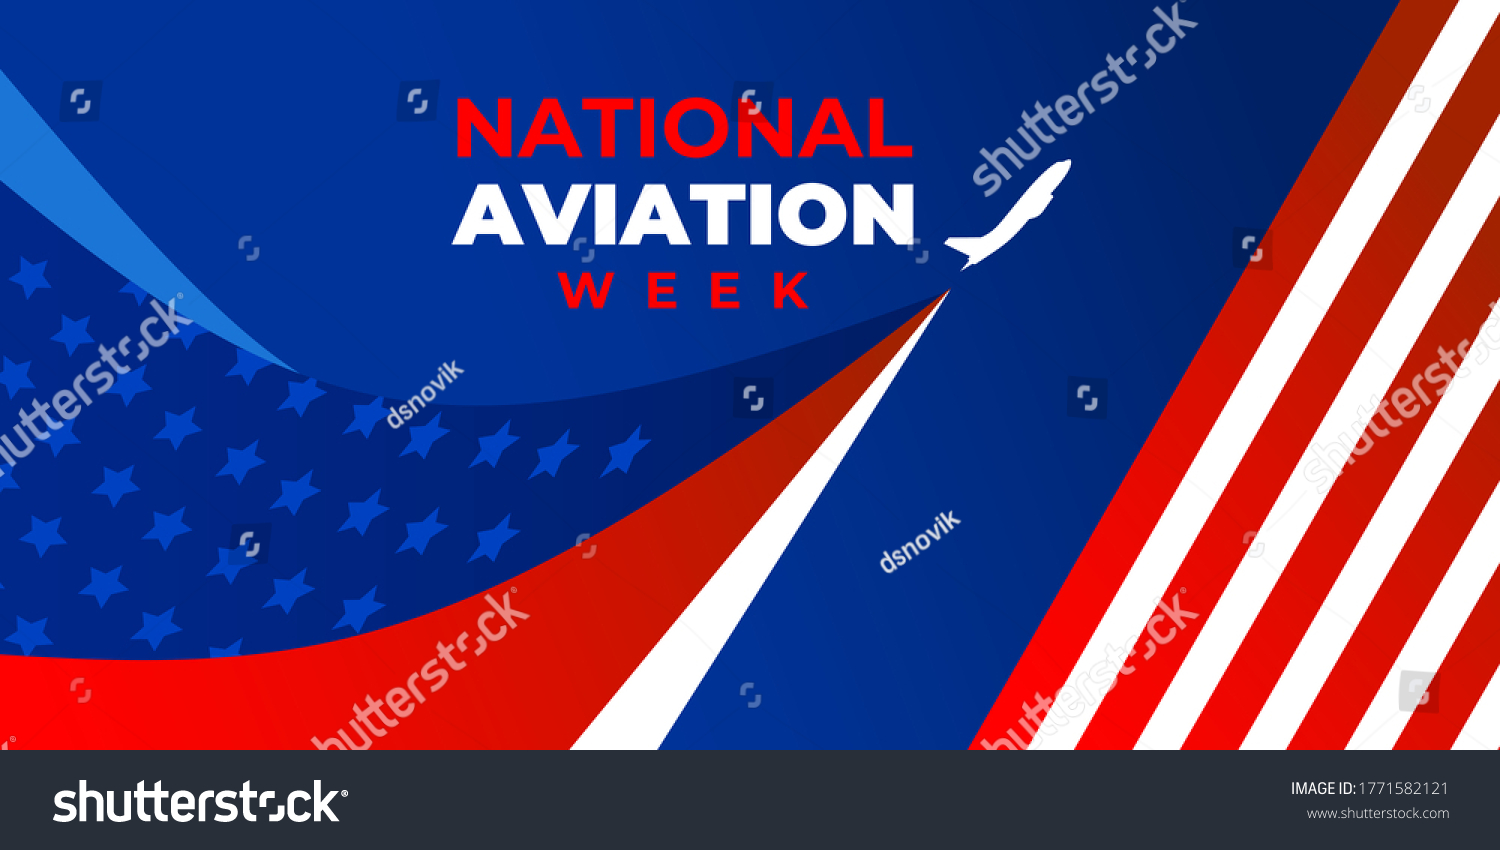 National Aviation Week Vector Web Banner Stock Vector (Royalty Free